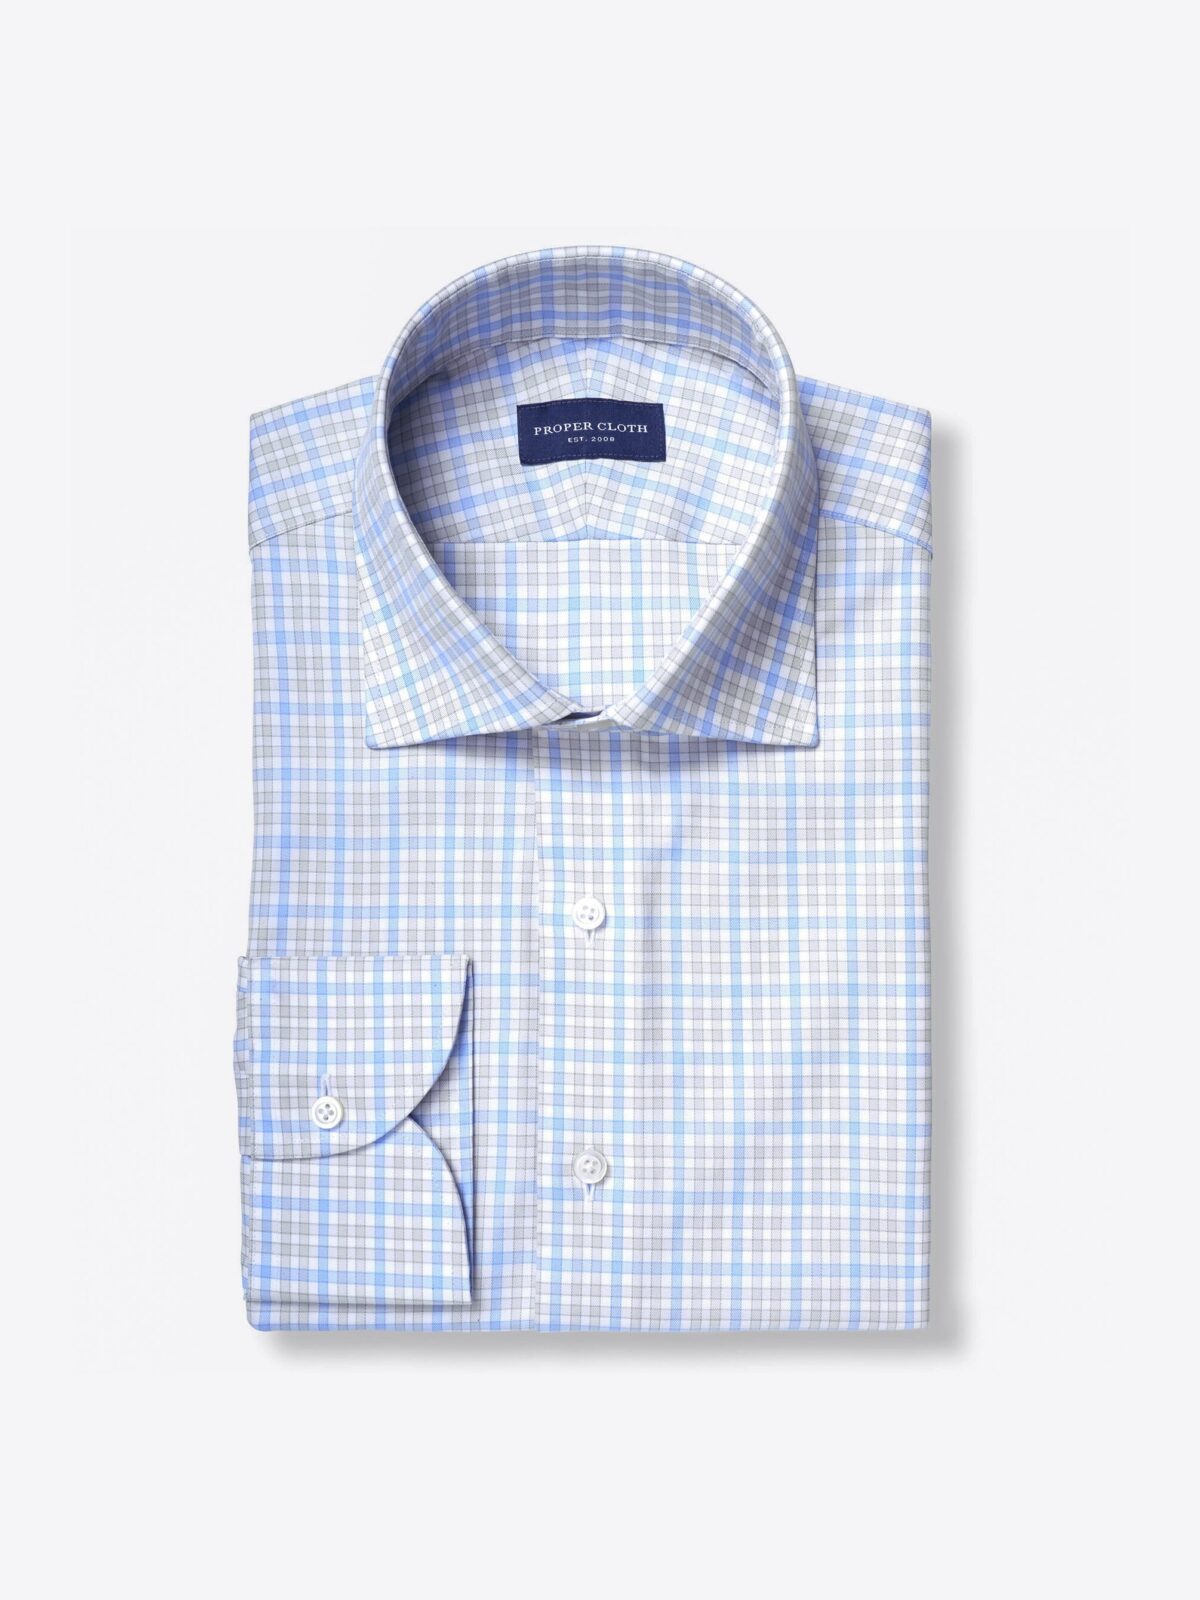 Thomas Mason WR Light Grey and Blue Multi Check Shirt by Proper Cloth